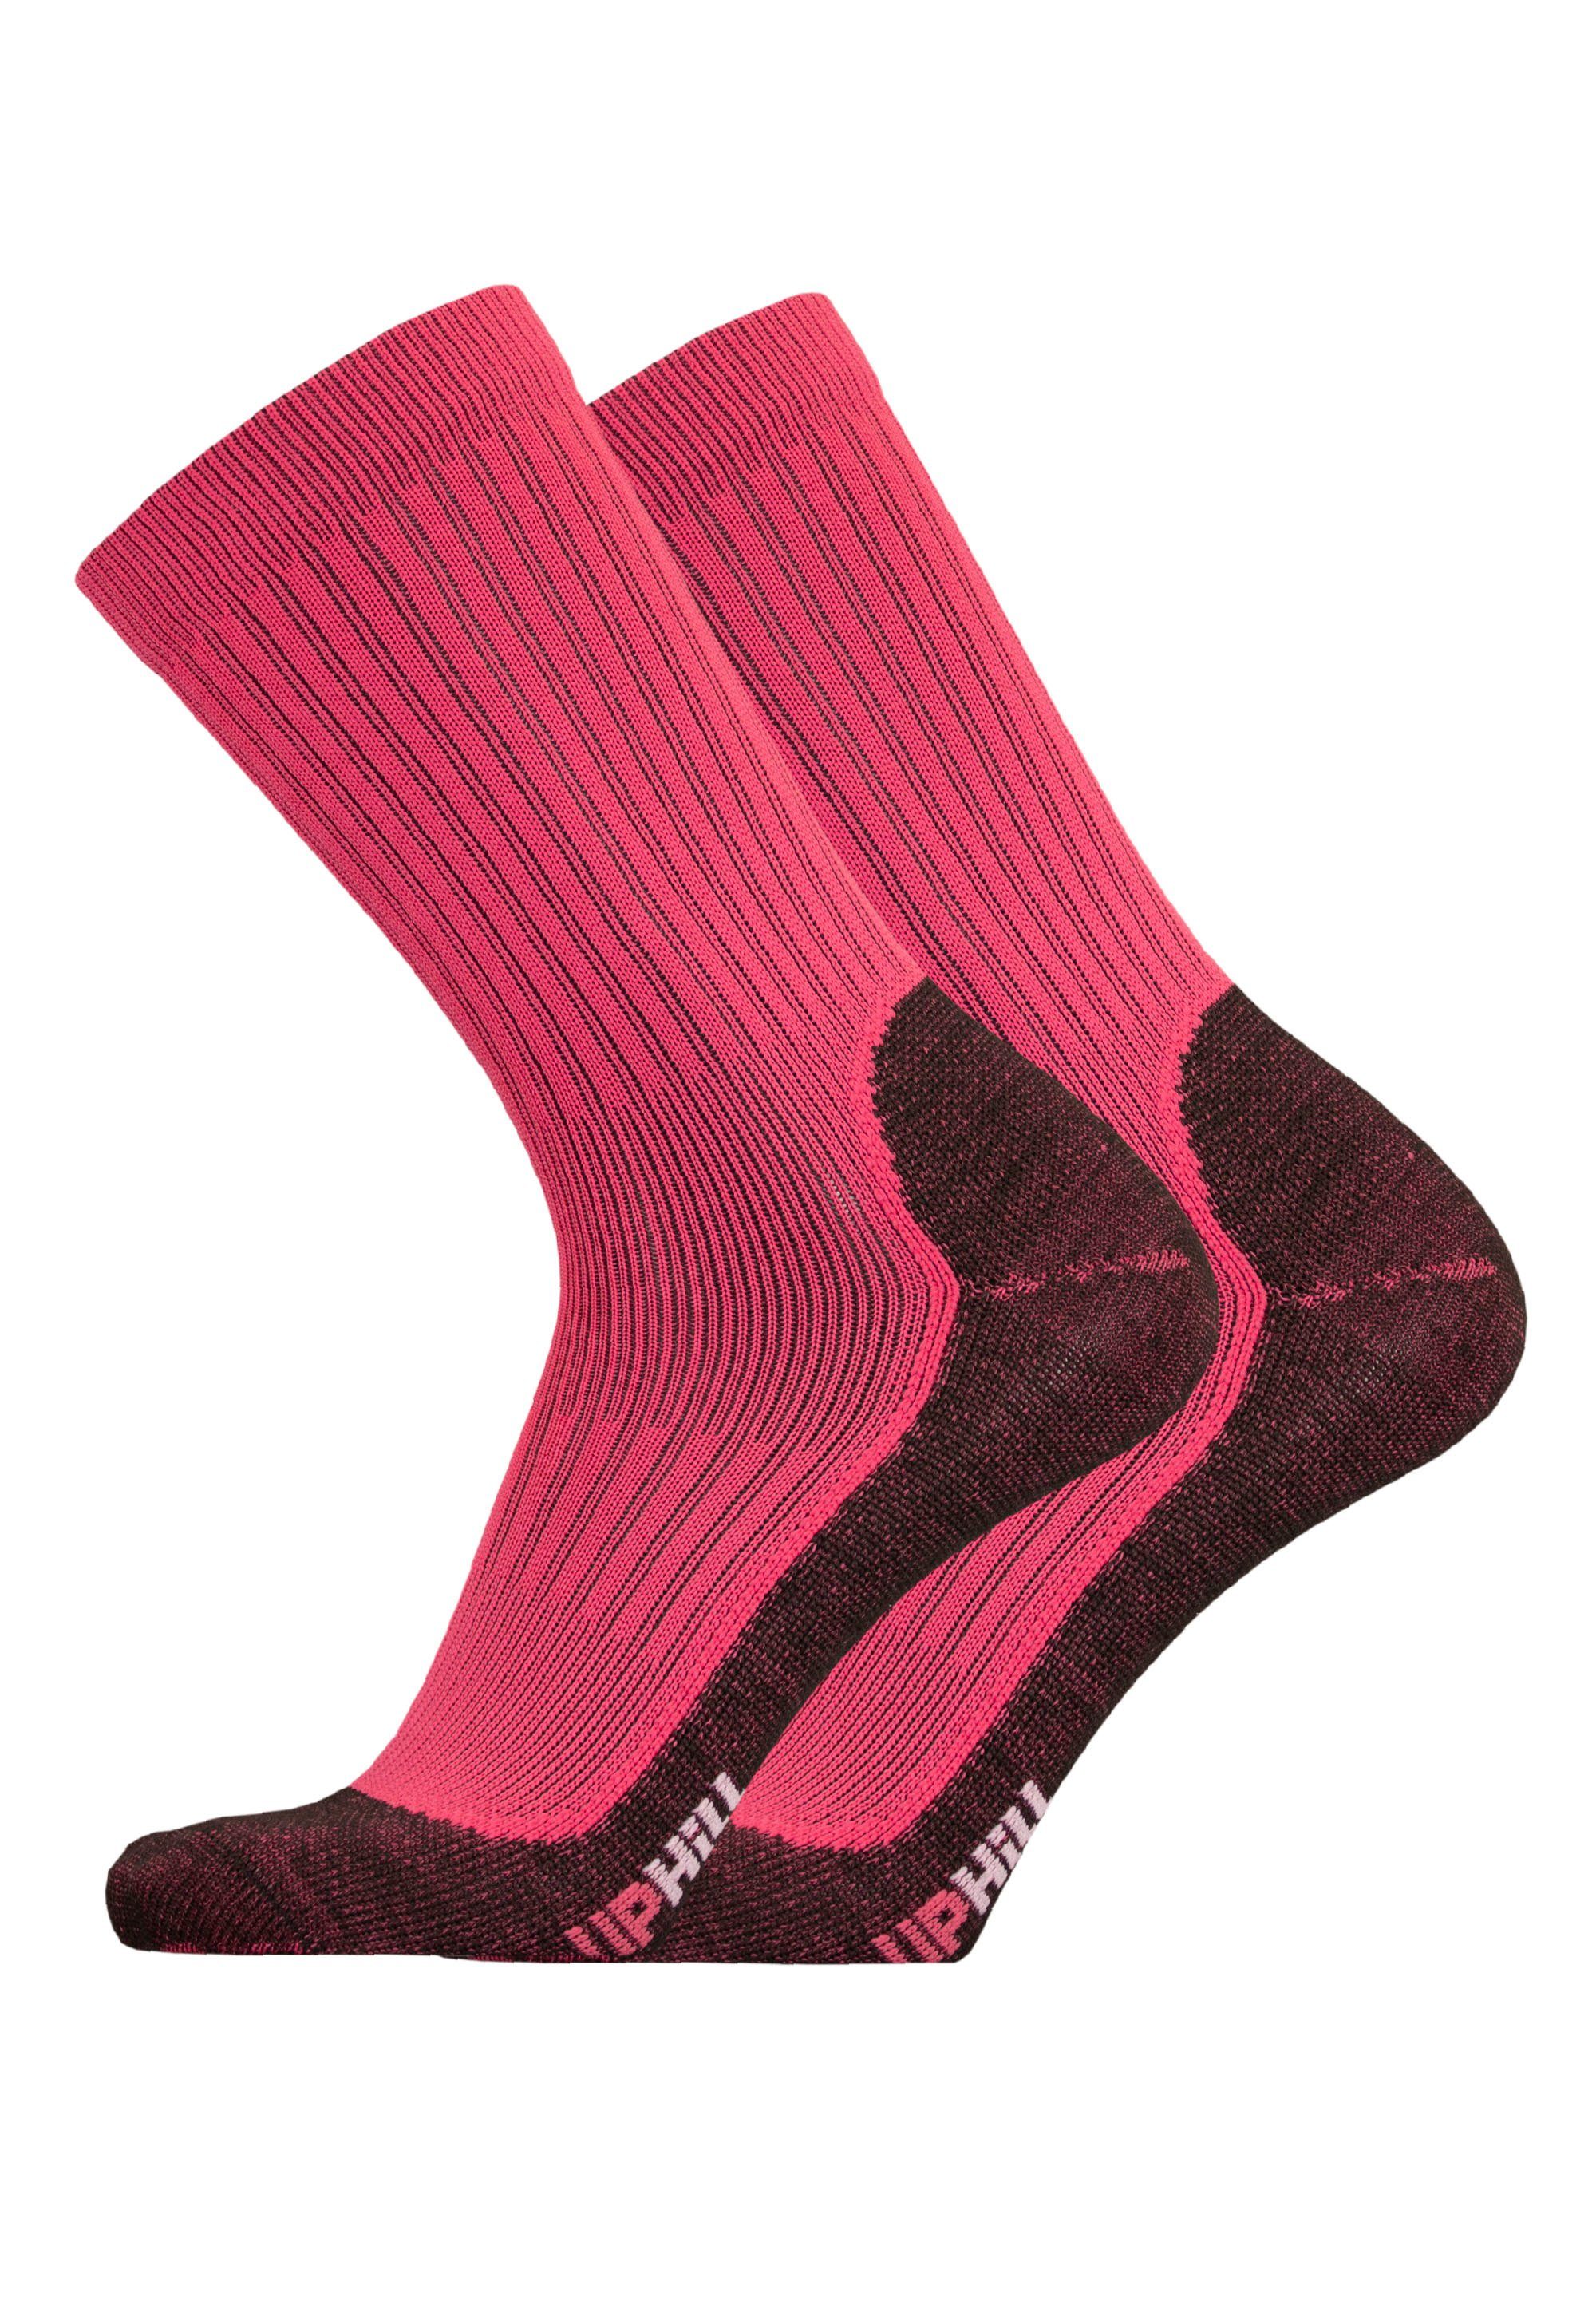 UphillSport Socken WINTER XC 2er Pack (2-Paar) mit atmungsaktiver Funktion